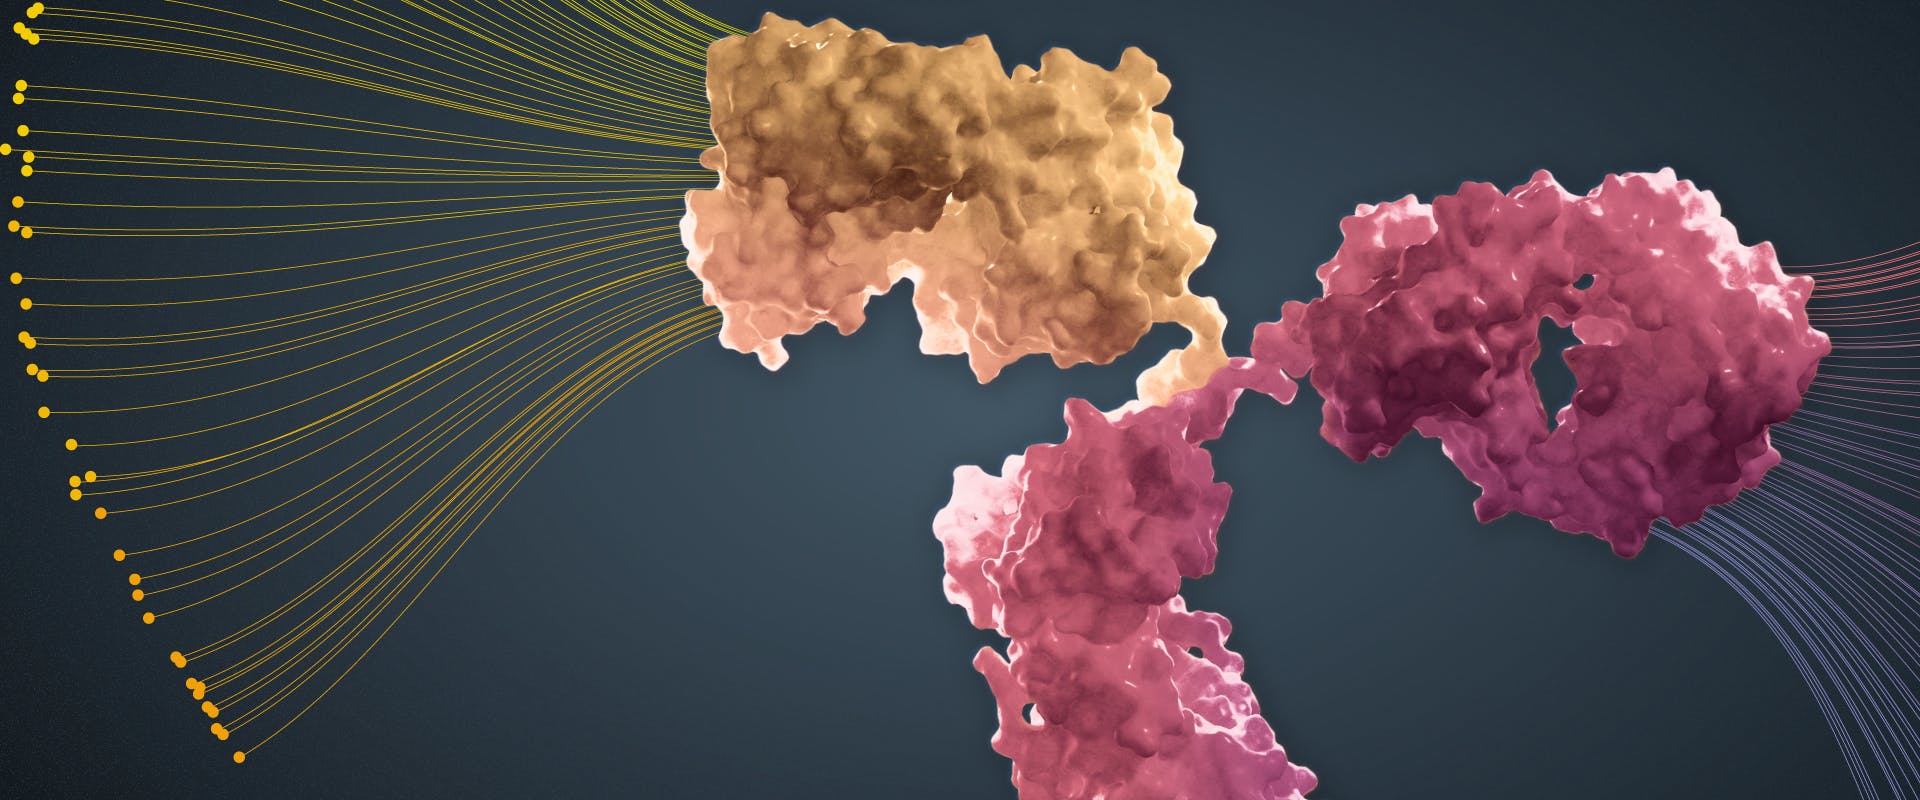 3D render of bispecific antibody representing parental diversity